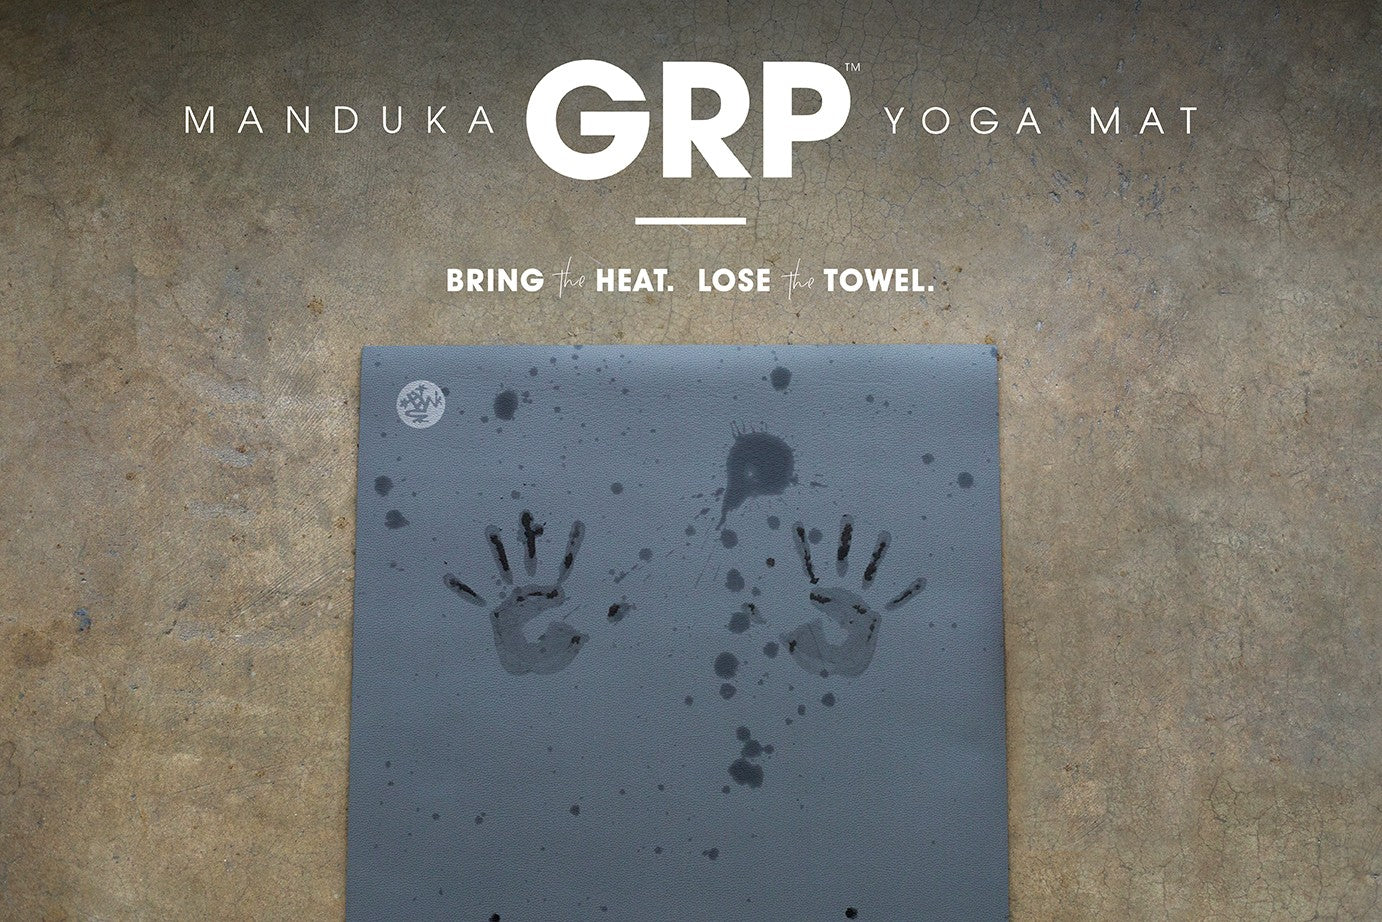 GRP Yoga Mat Poster Image - mat with hand prints showing sweat | Manduka | Eco Yoga Store